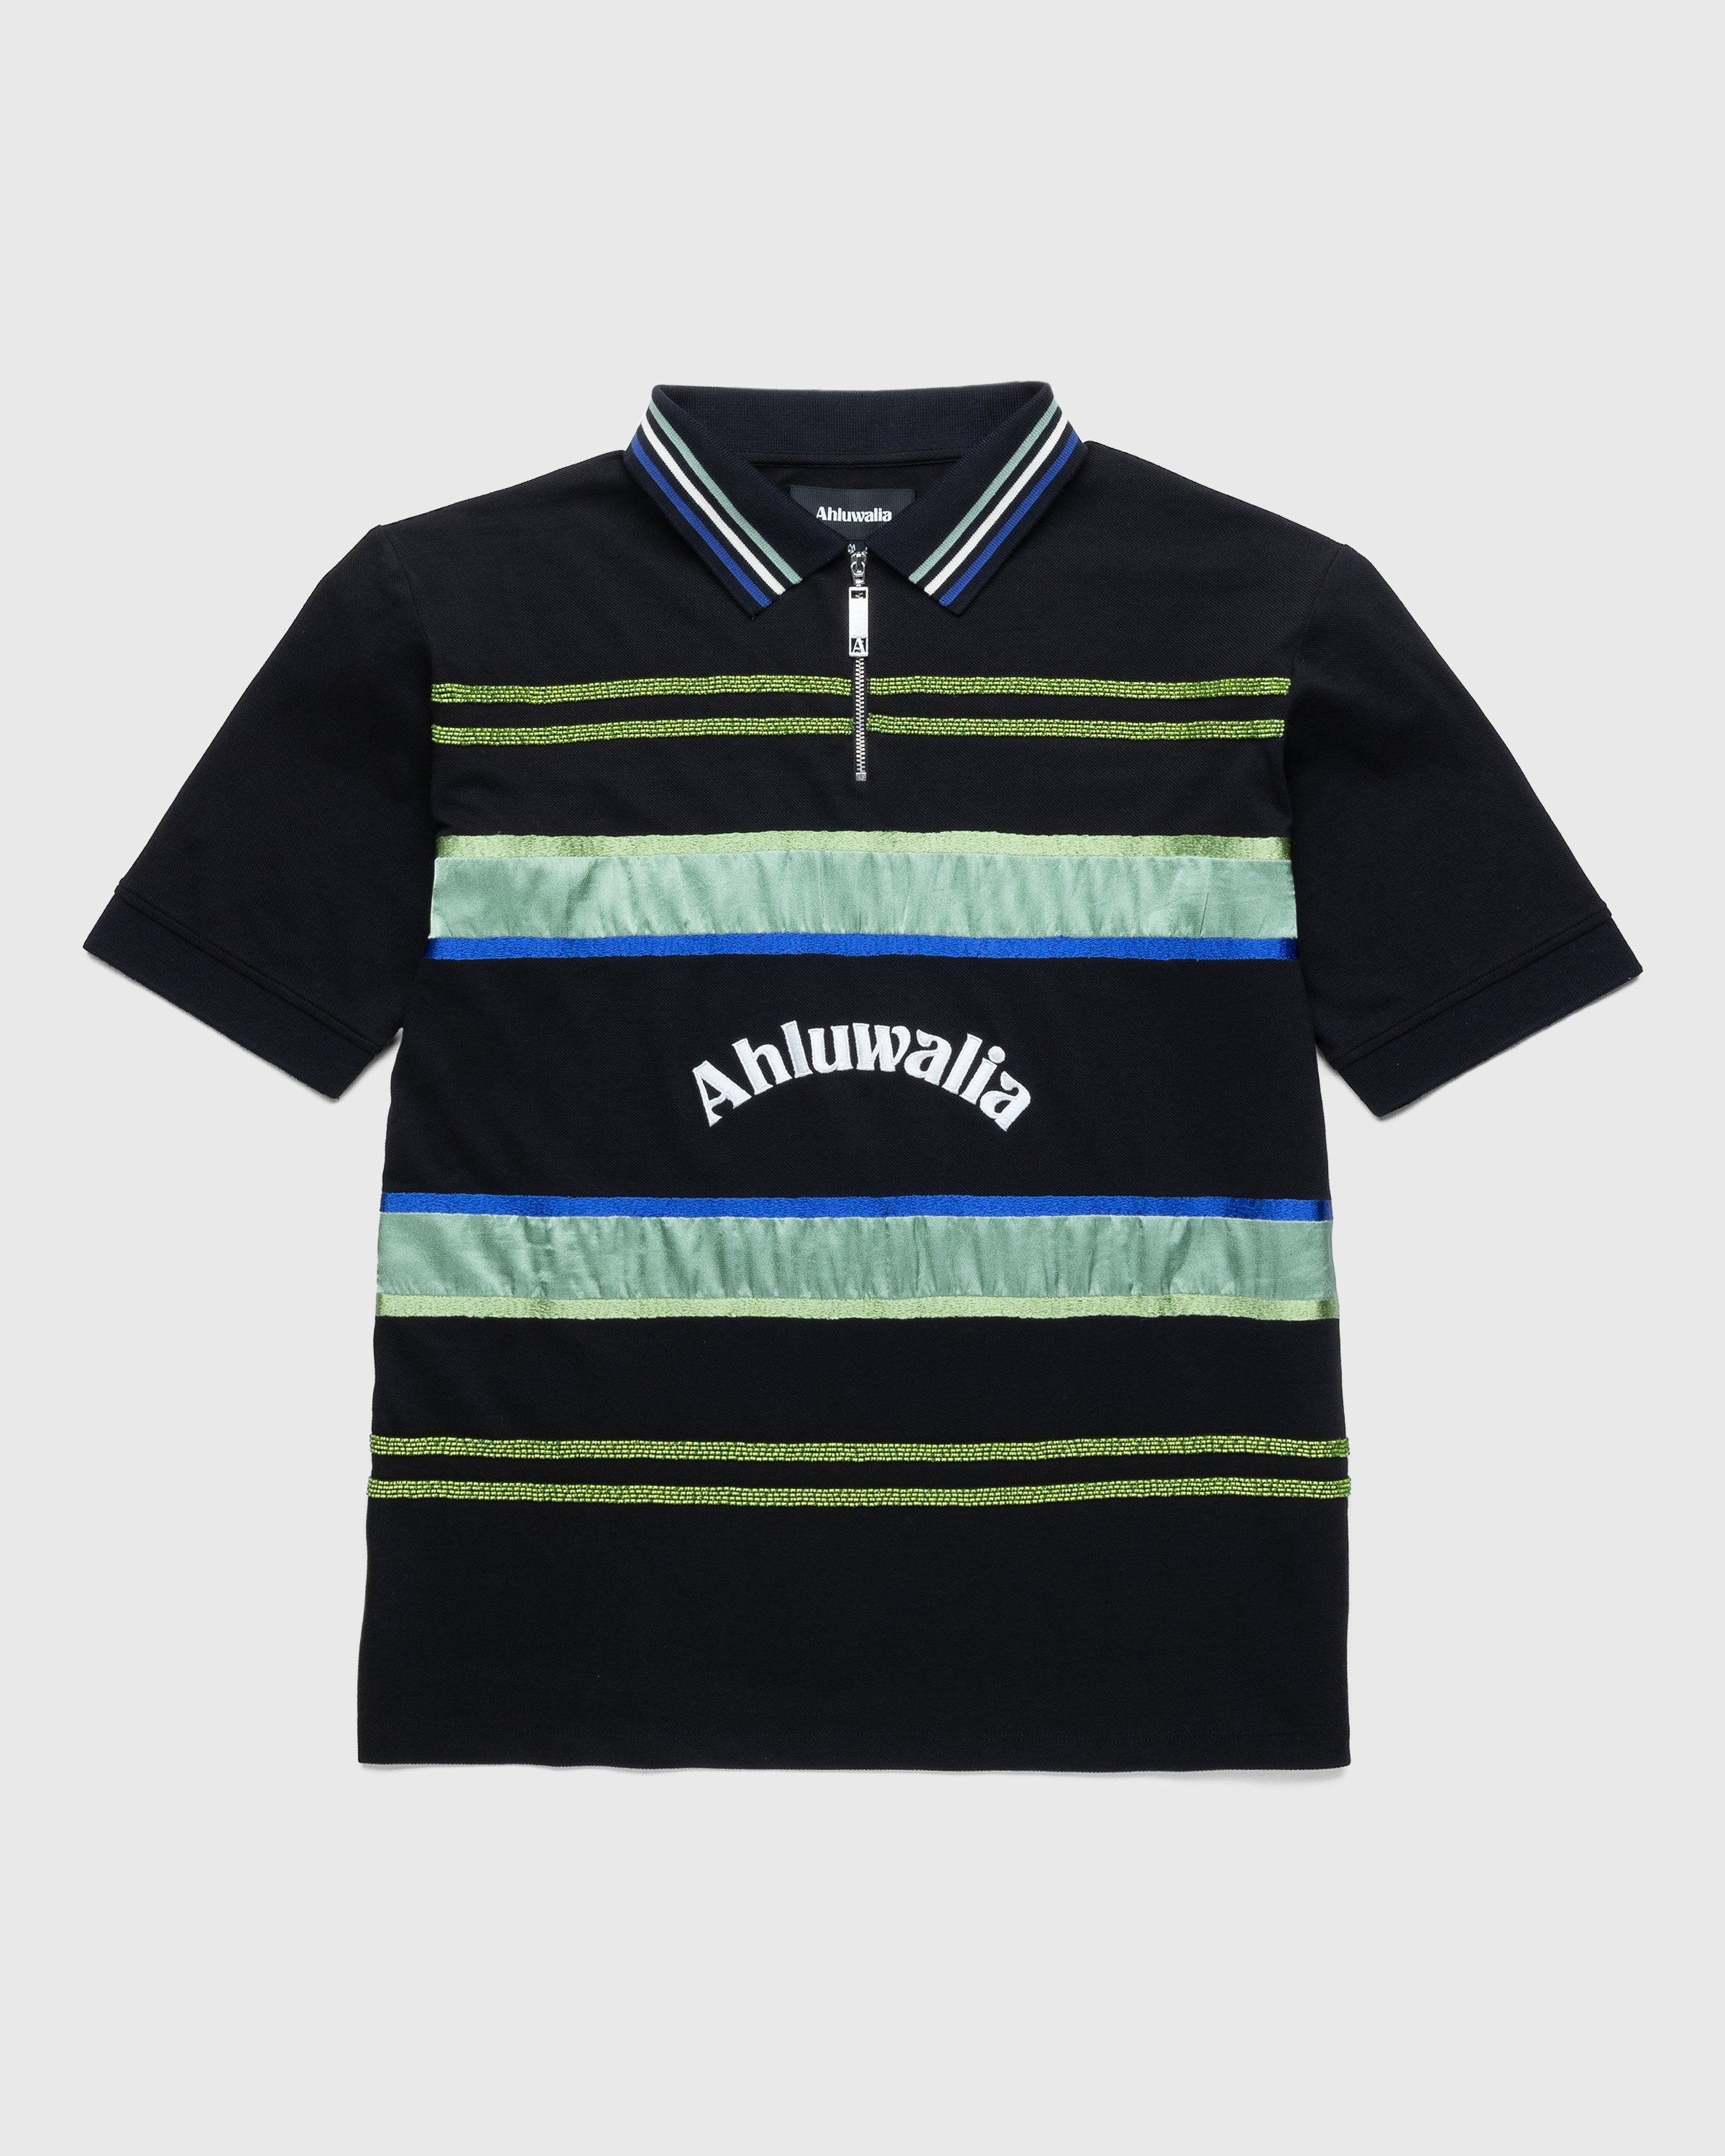 Ahluwalia – Buke Short-Sleeve Polo Black - Shirts - Black - Image 1